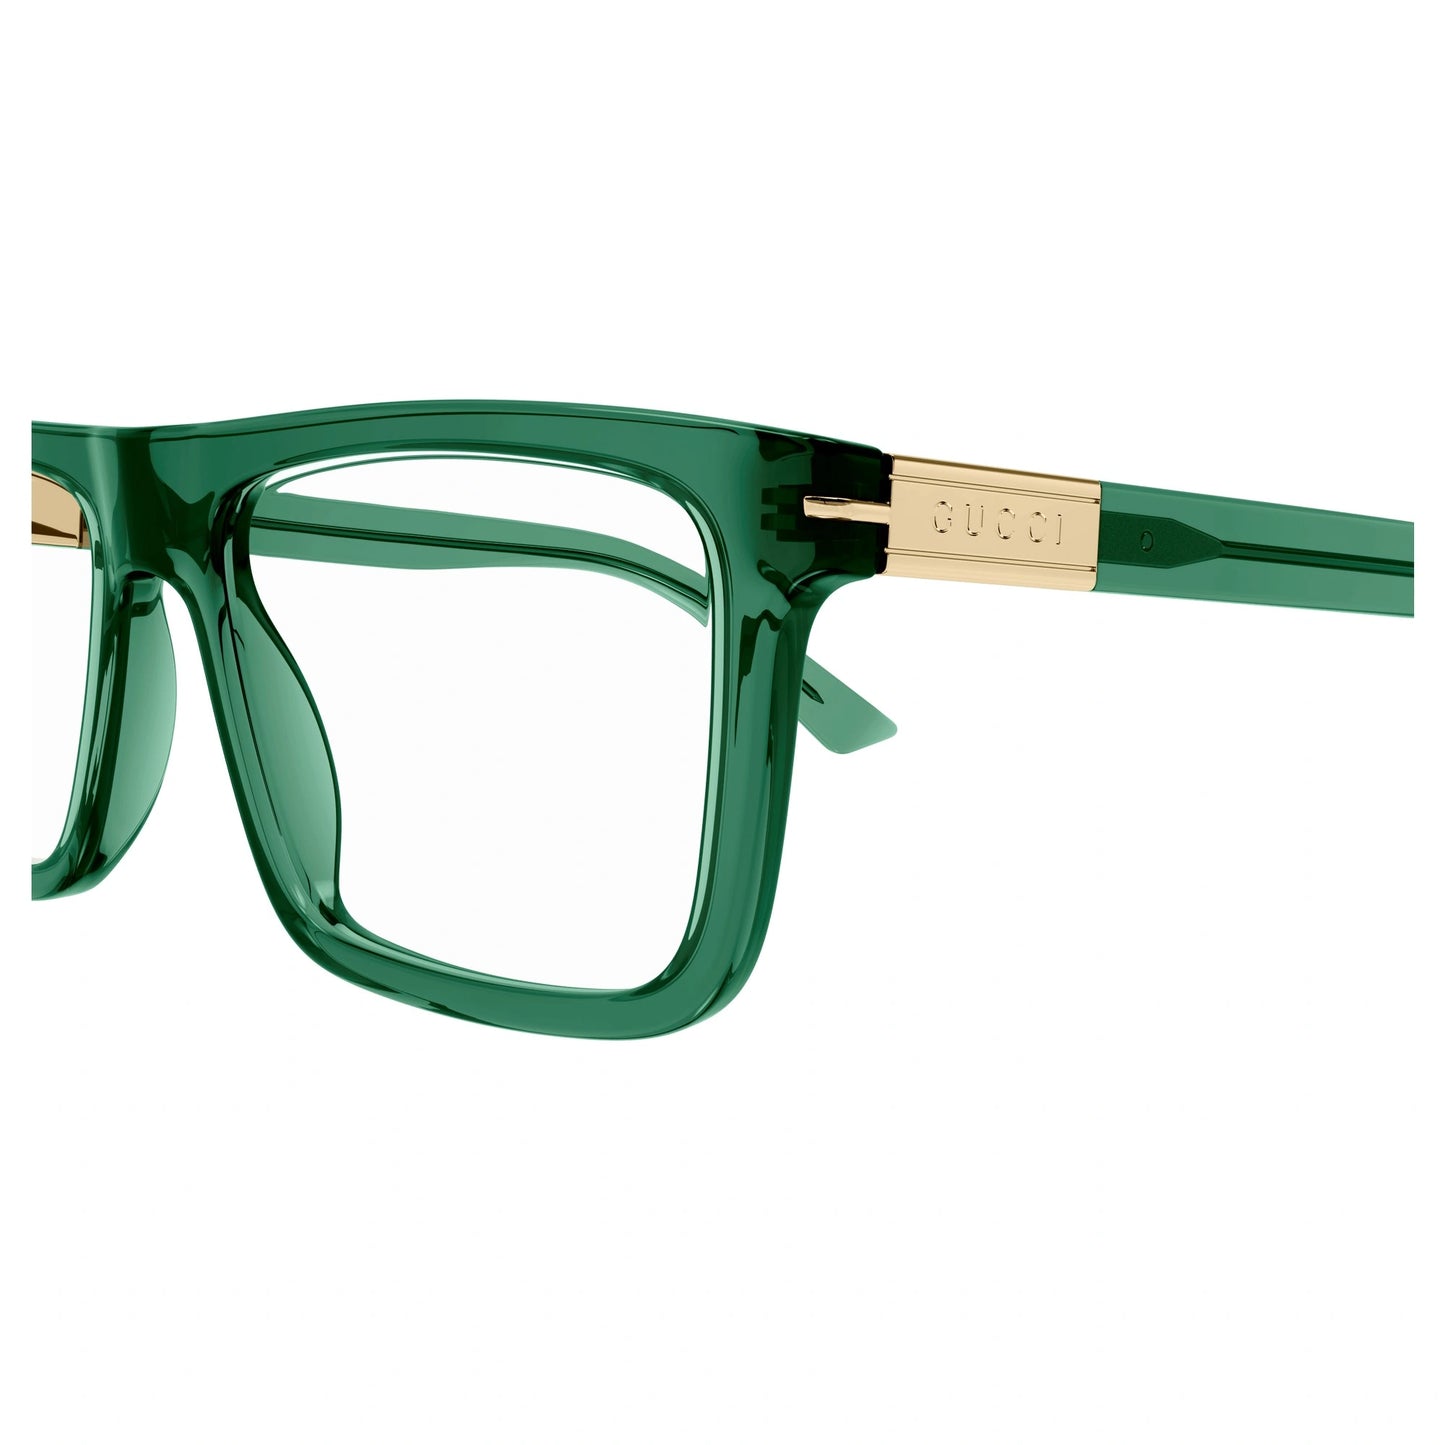 Gucci GG1504o-007 56mm New Eyeglasses